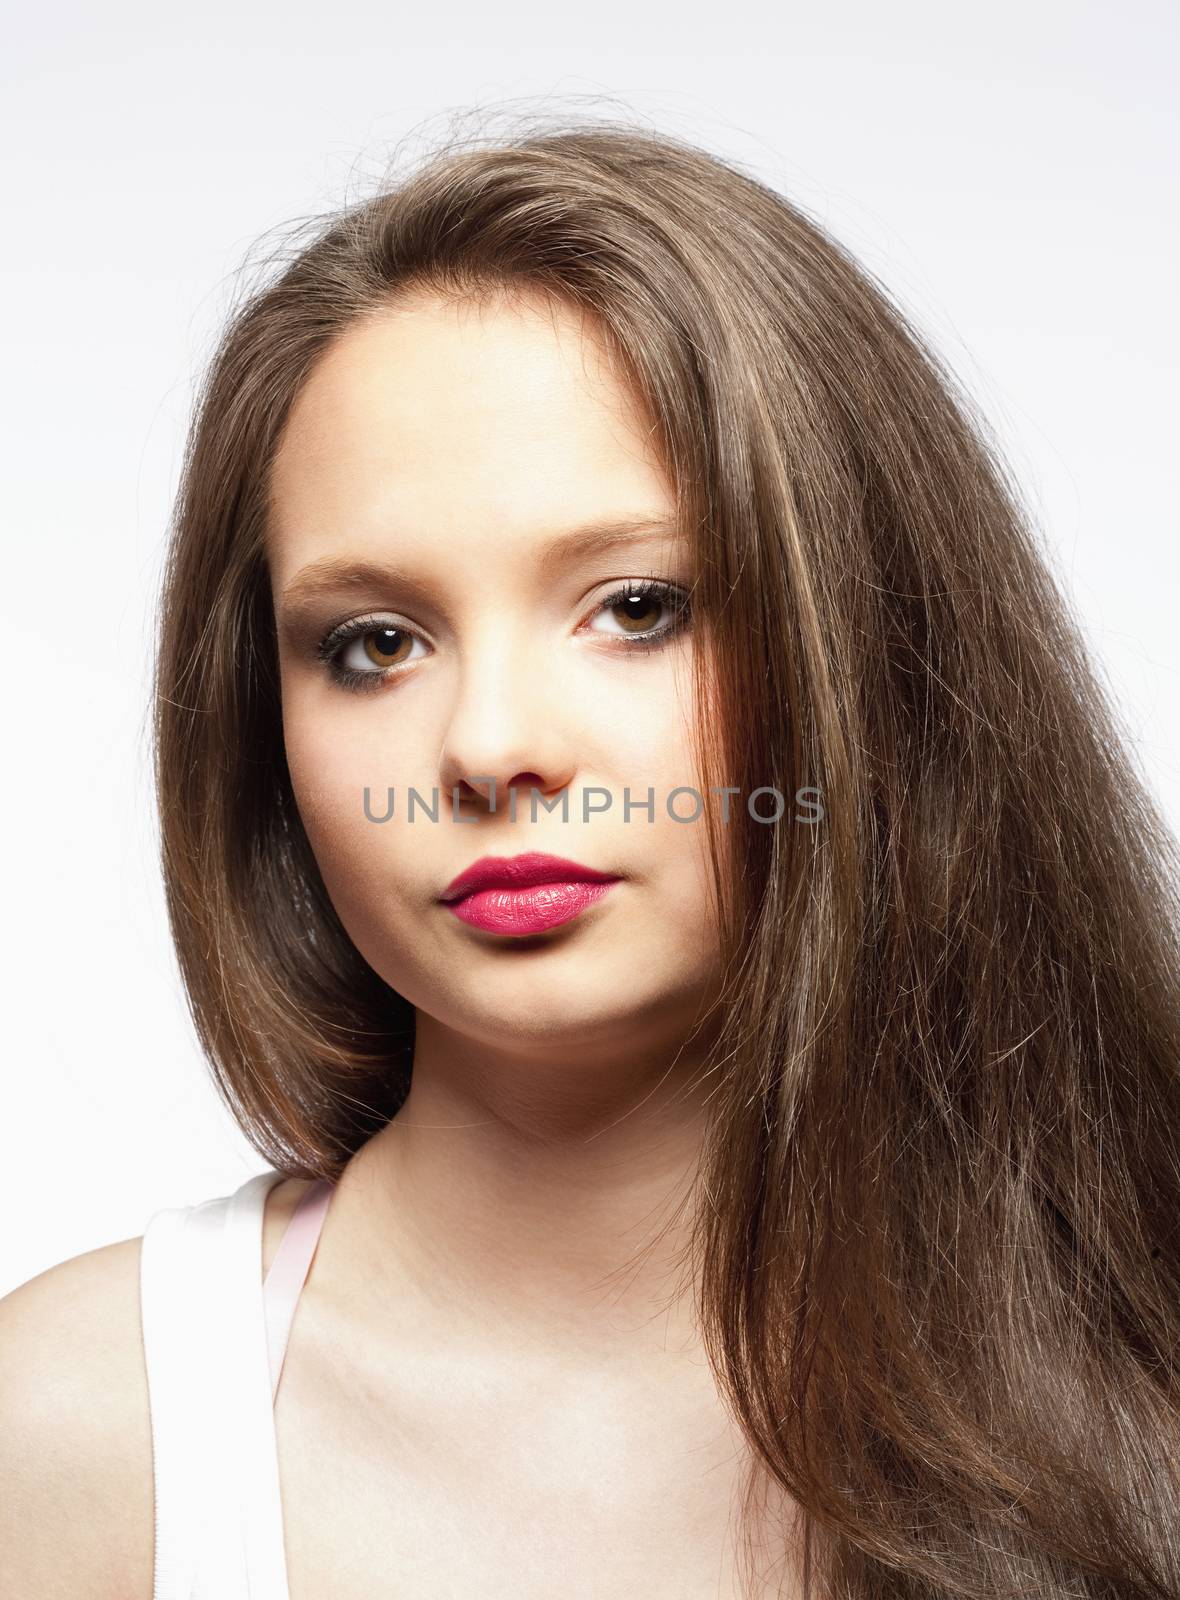 Beautiful Teenage Girl with Long Brown Hair by courtyardpix